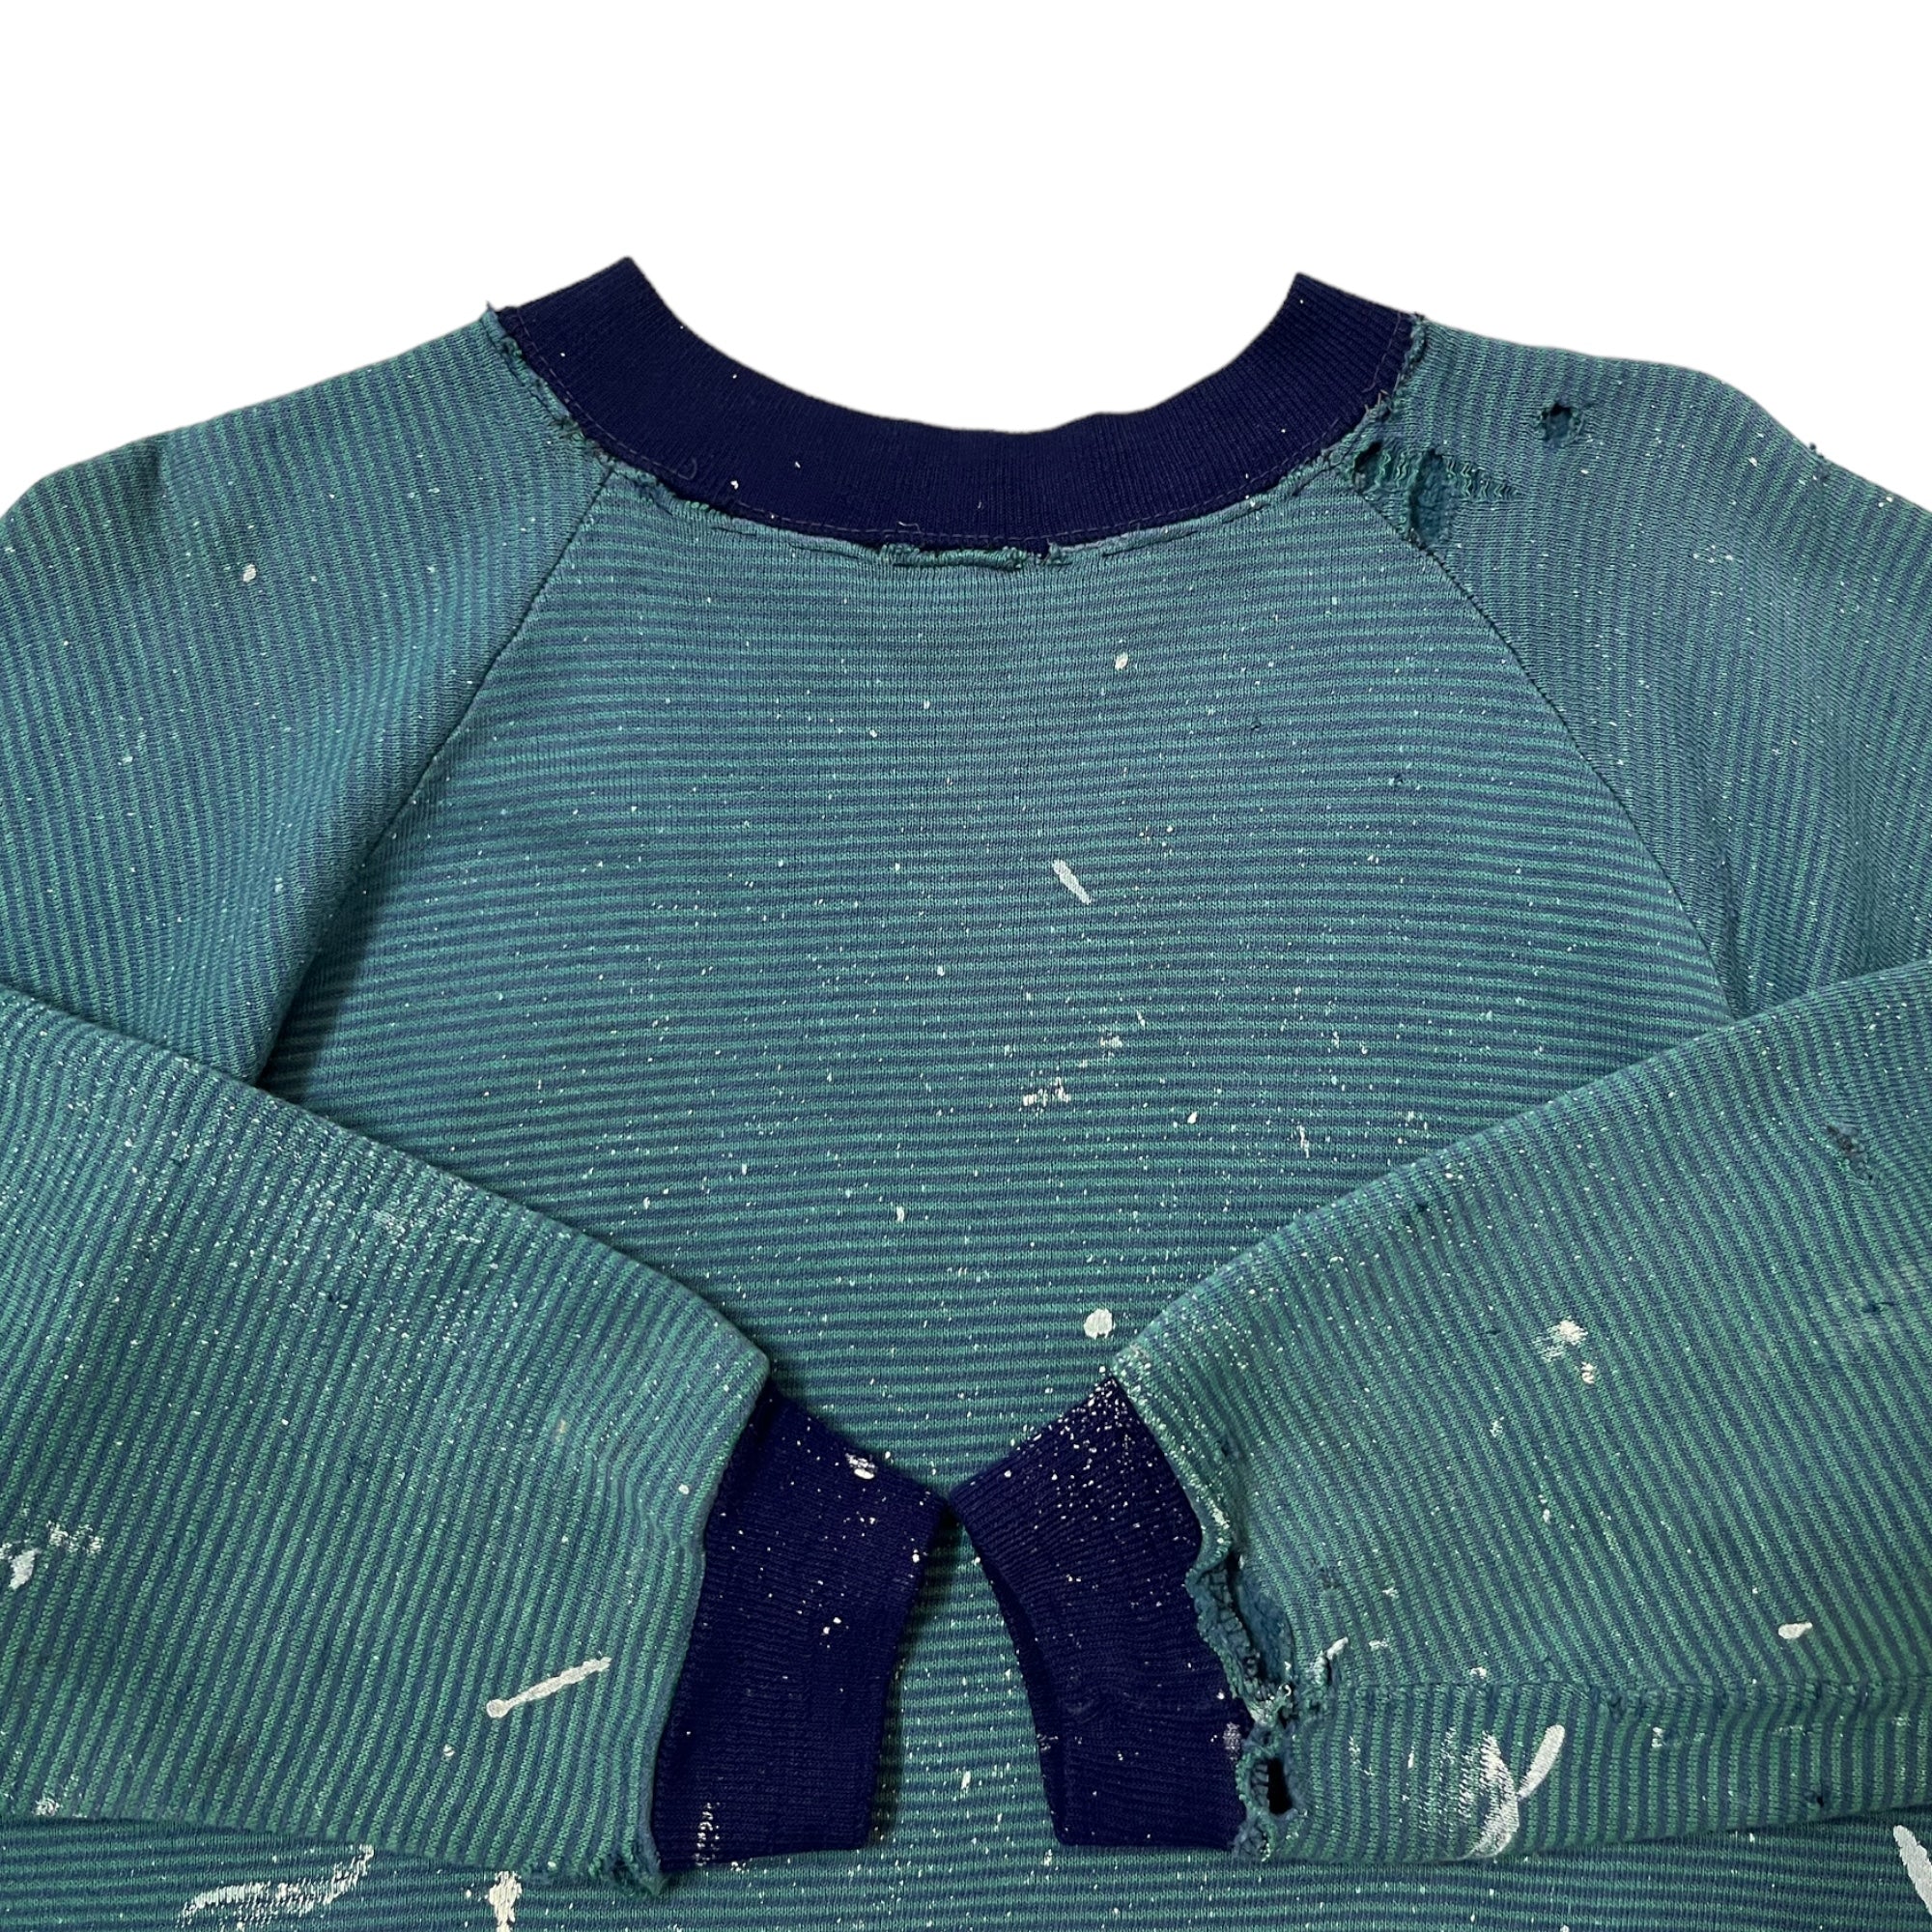 1970s Distressed Painter Raglan Striped Sweatshirt - Green/Navy - M